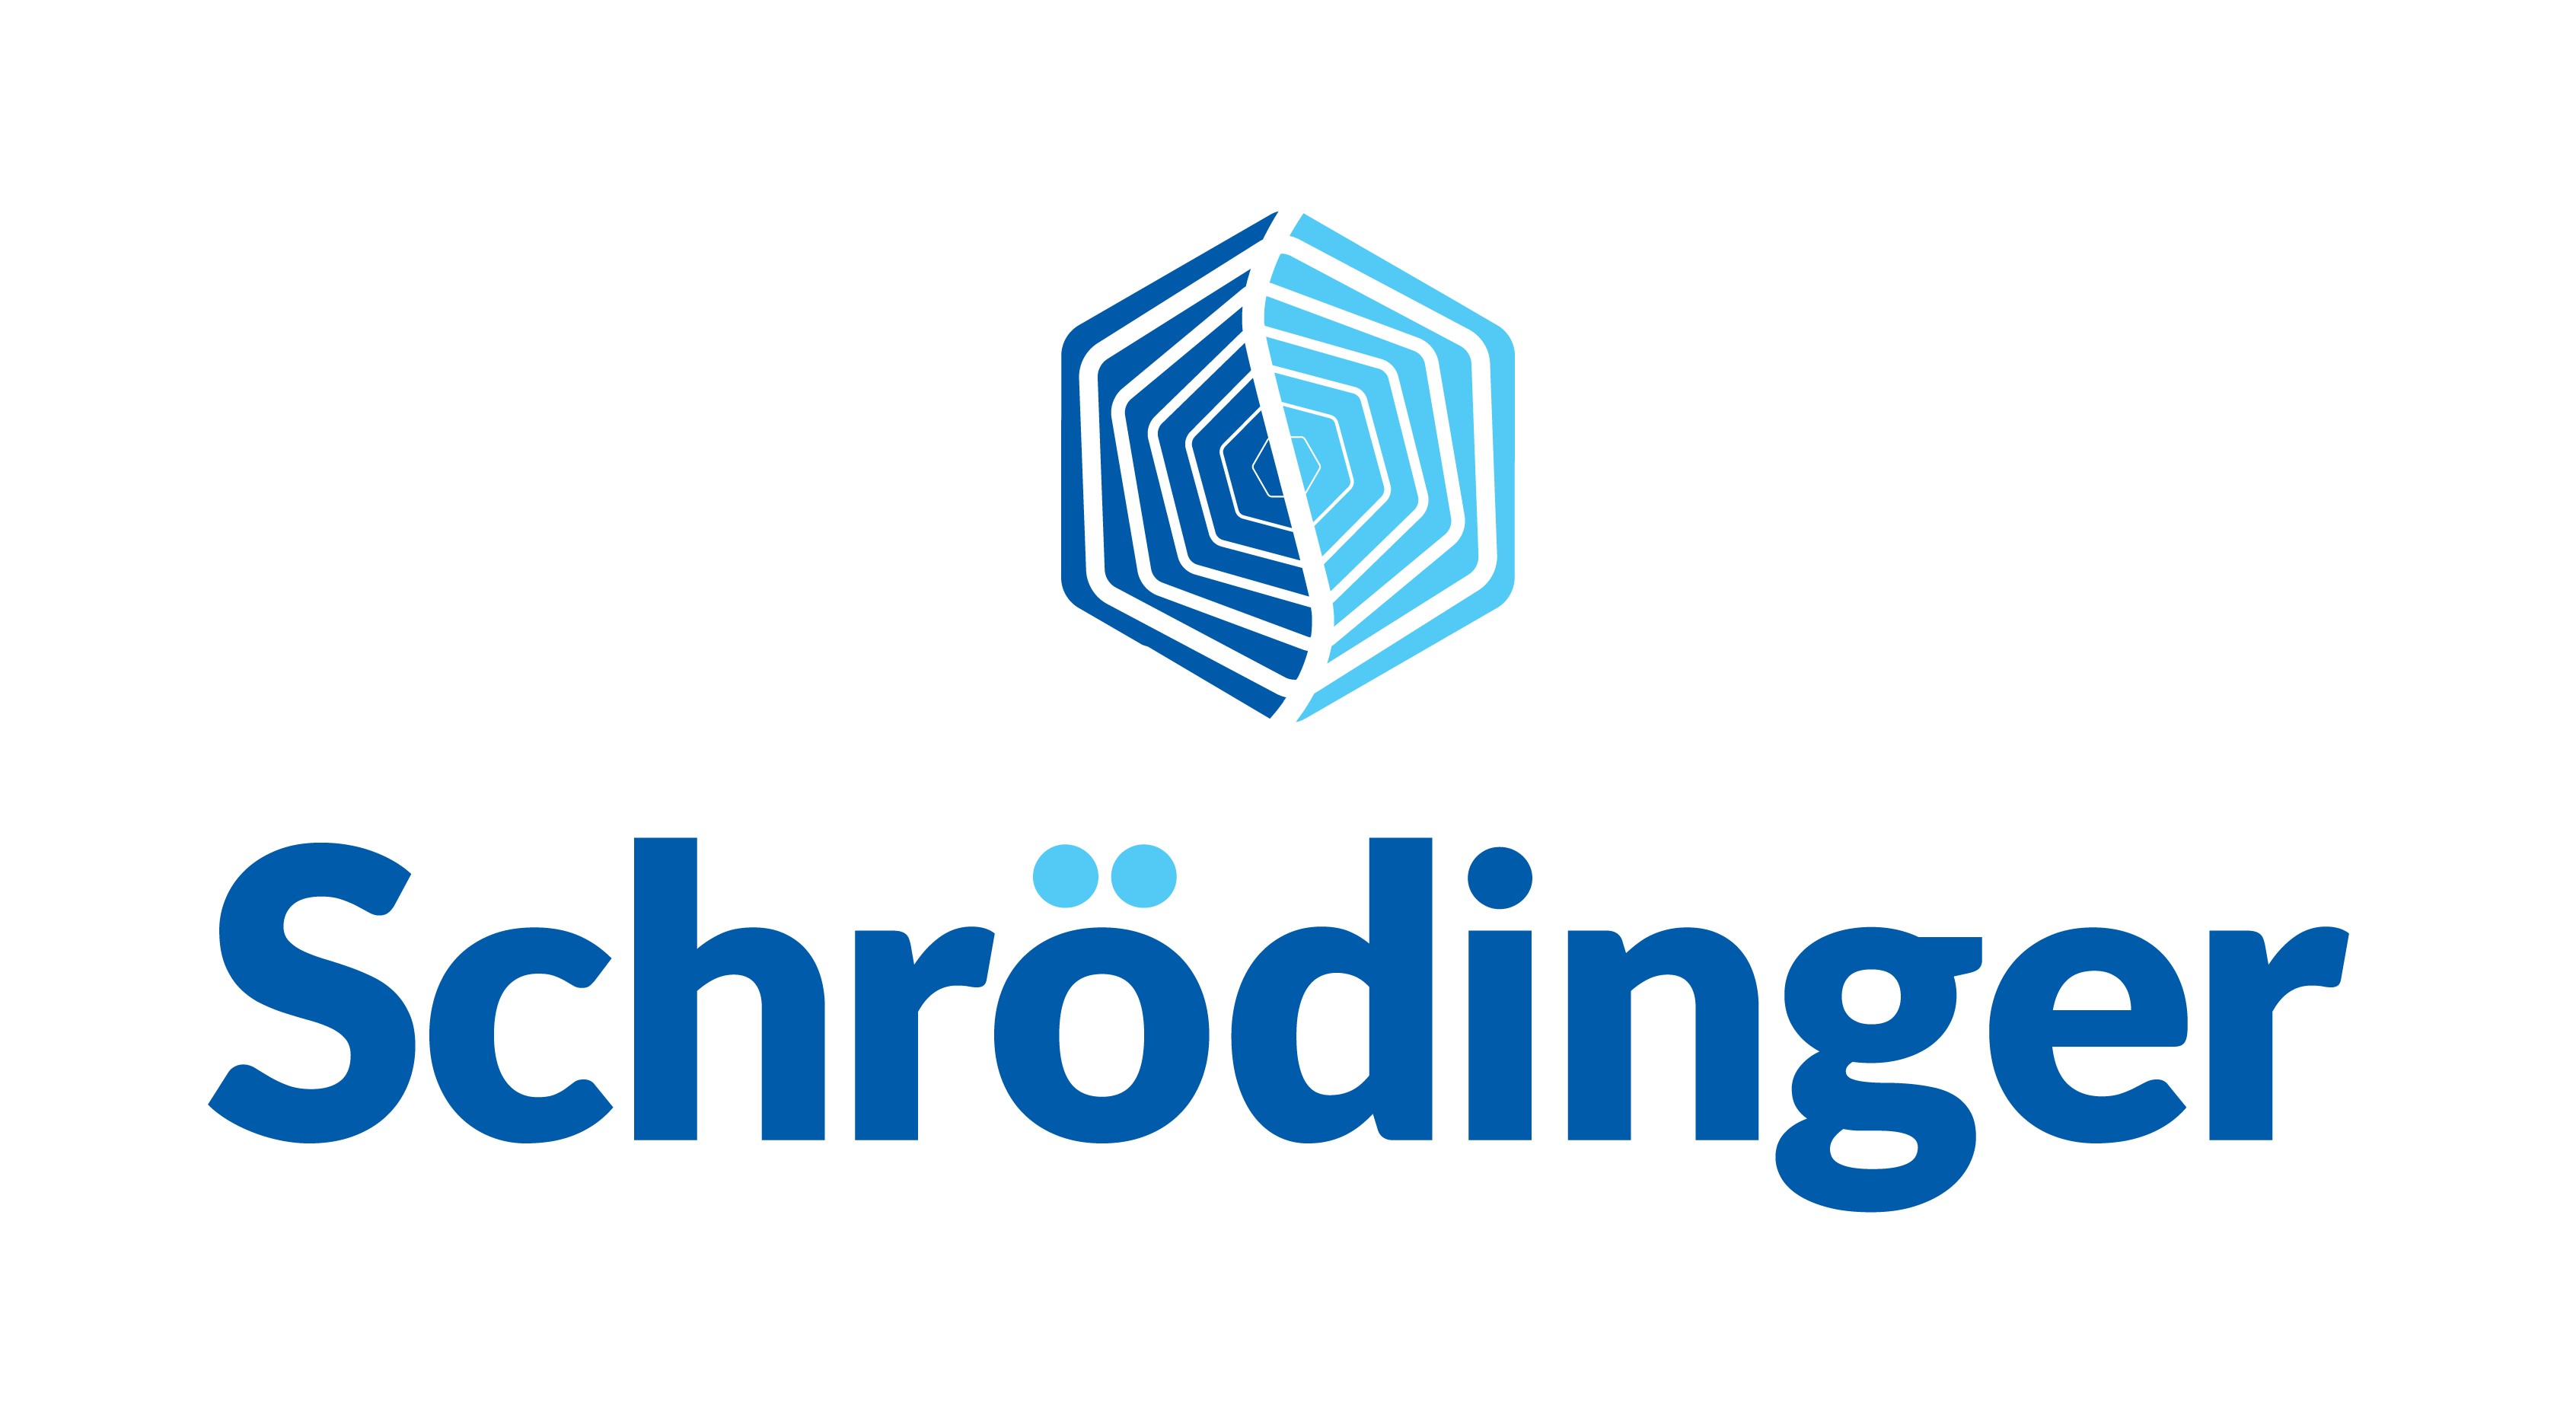 Schodinger Logo